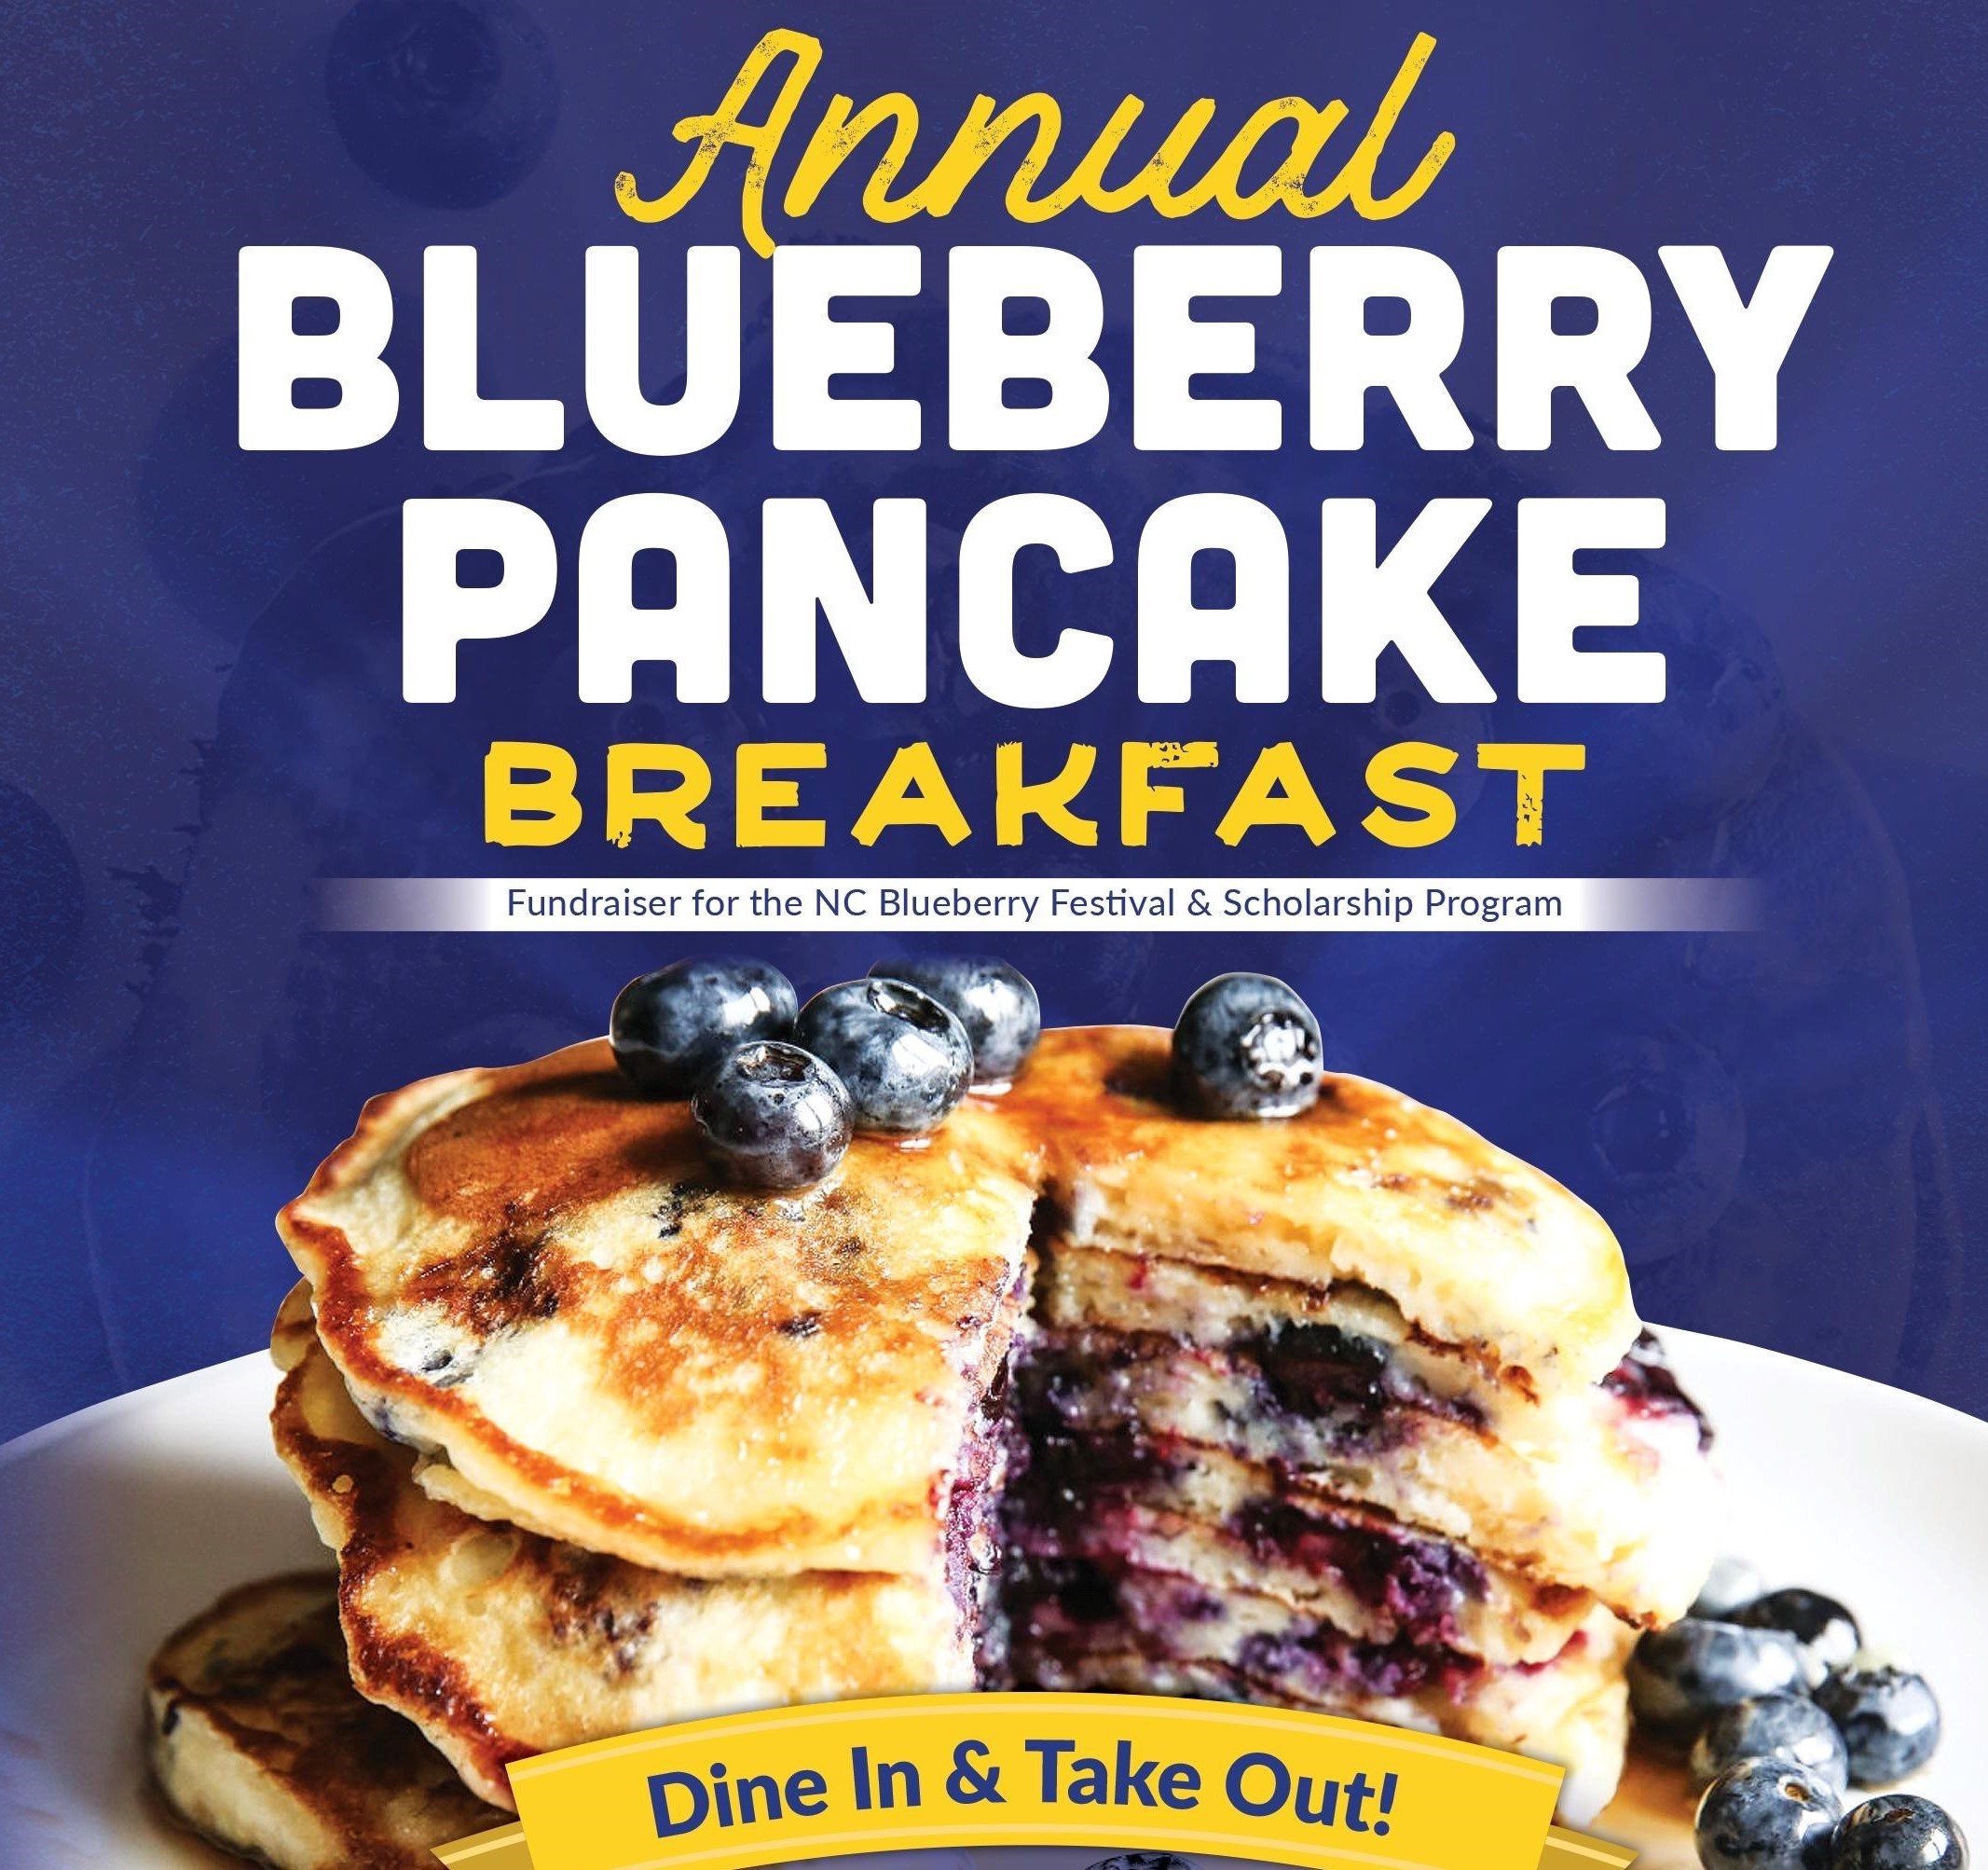 Annual NC Blueberry Festival Pancake Breakfast